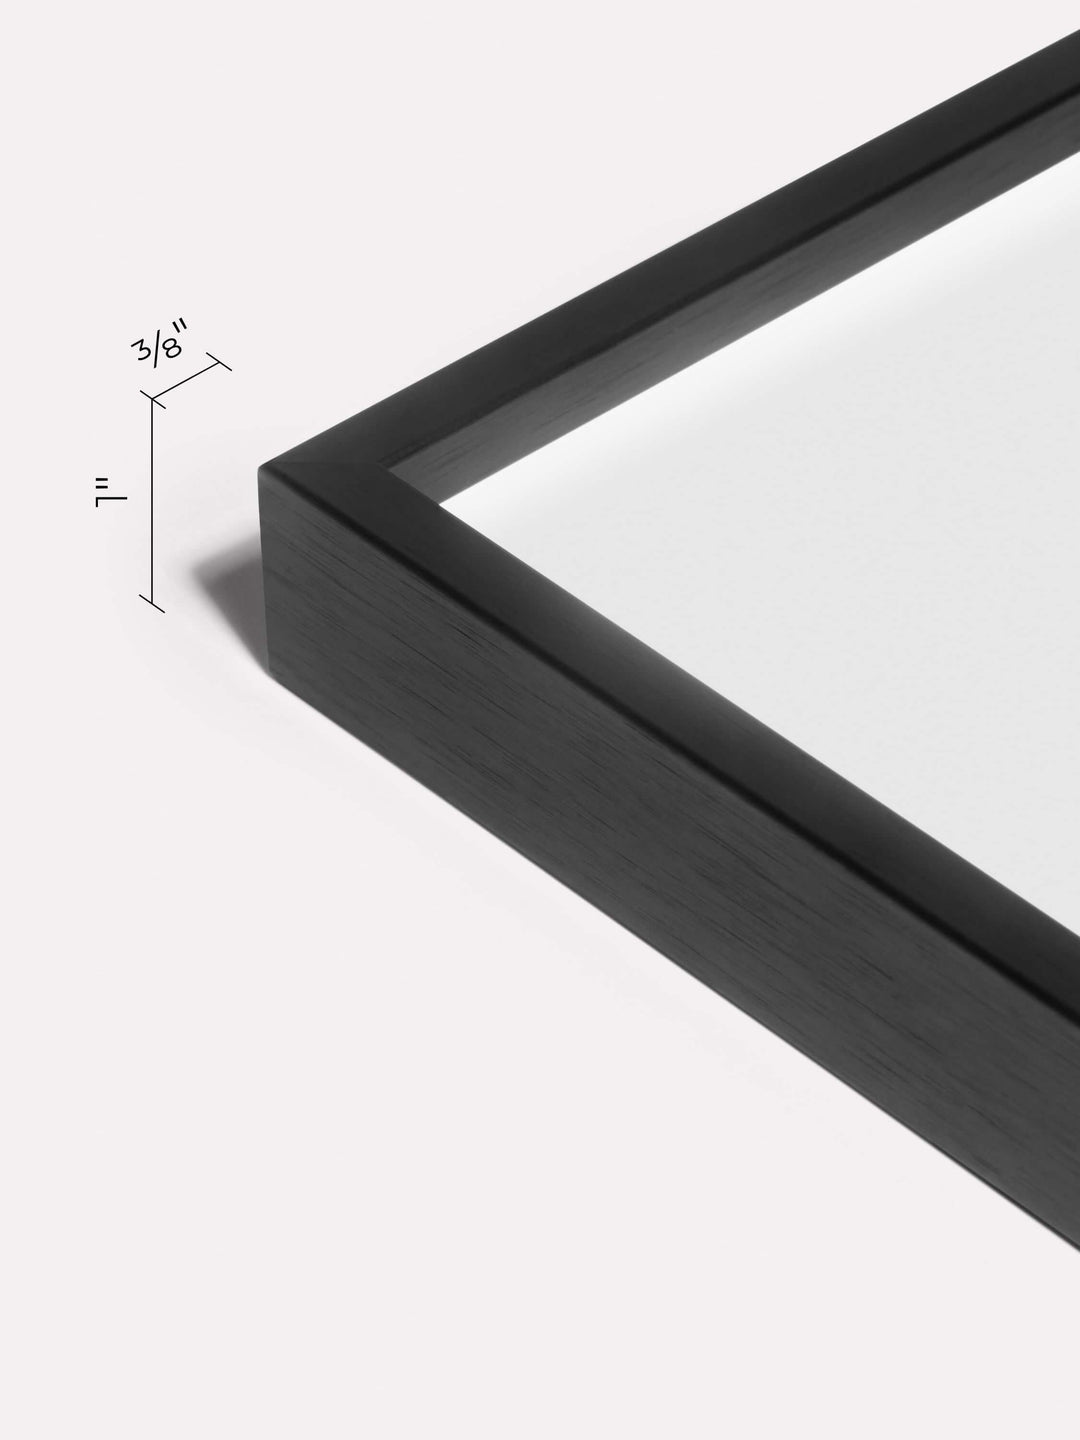 12x16-inch Thin Frame, Black - Close-up view